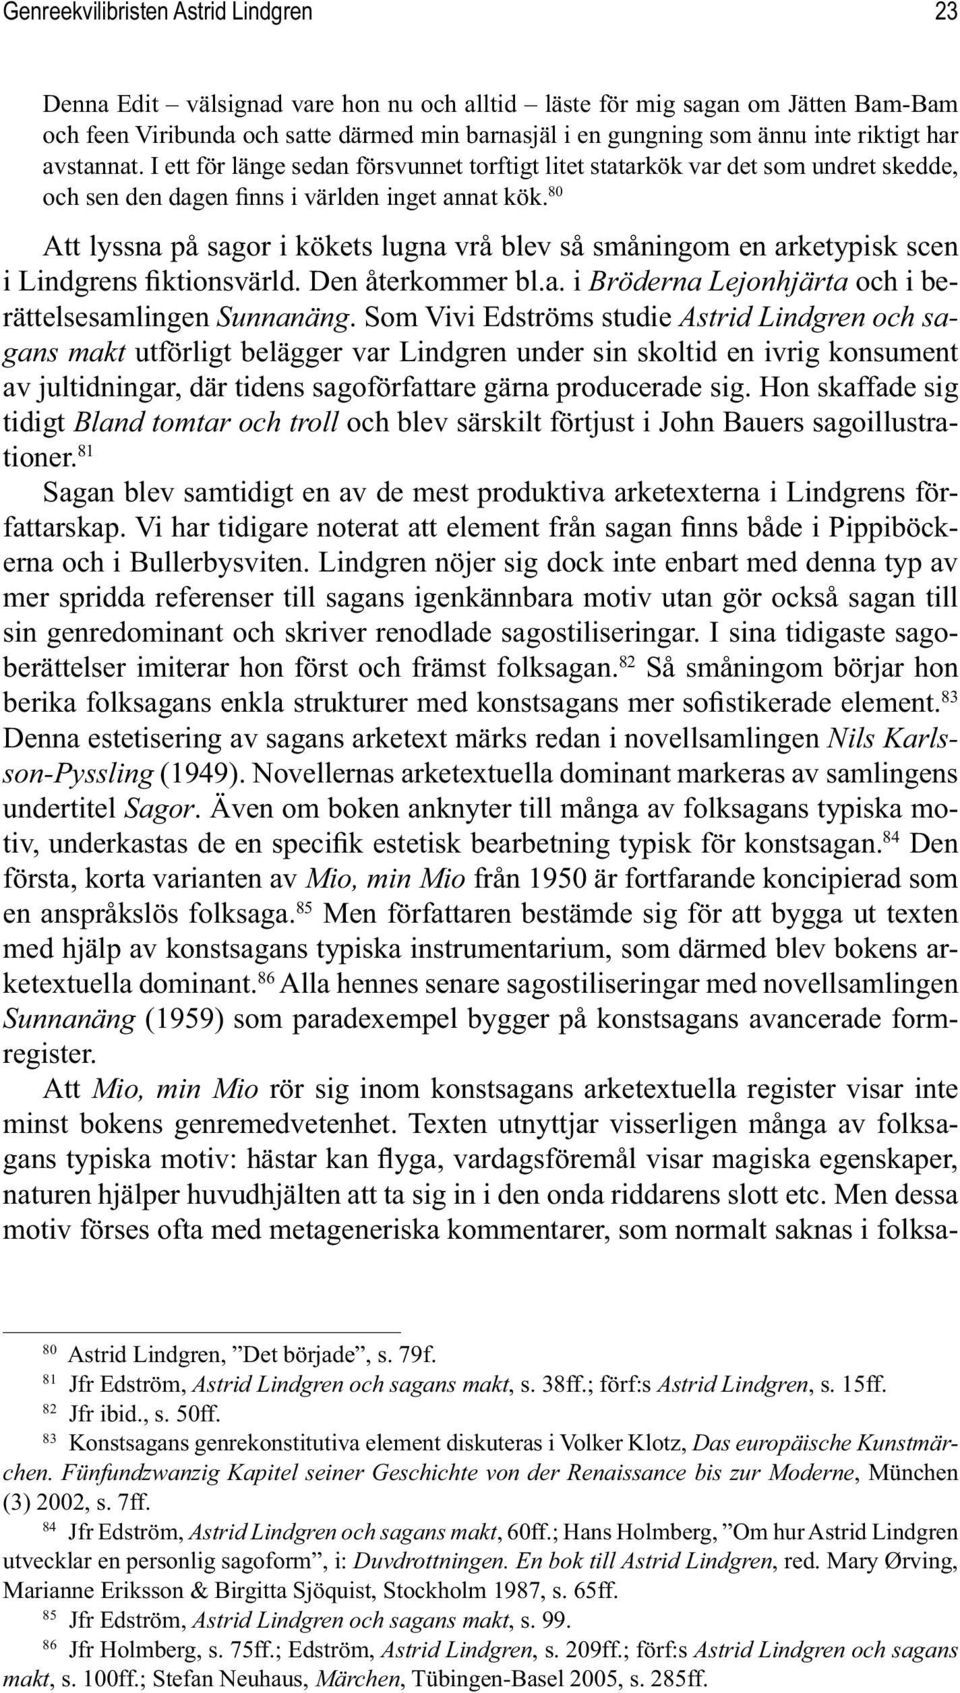 Genreekvilibristen Astrid Lindgren* - PDF Free Download